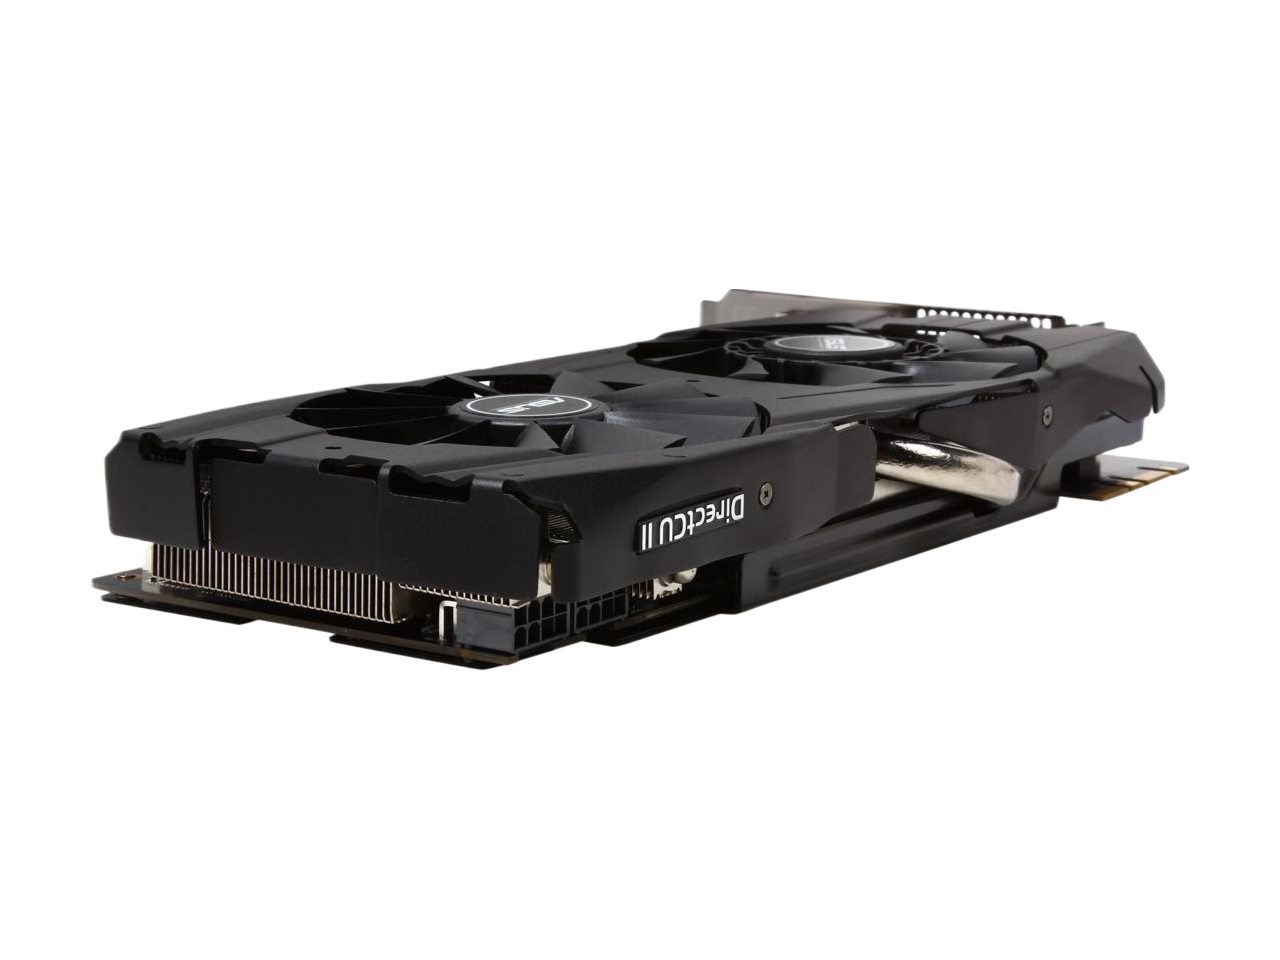 ASUS DirectCU II G-SYNC Support GeForce GTX 780 Ti 3GB 384-Bit GDDR5 PCI Express 3.0 HDCP Ready SLI Support Video Card GTX780TI-DC2OC-3GD5